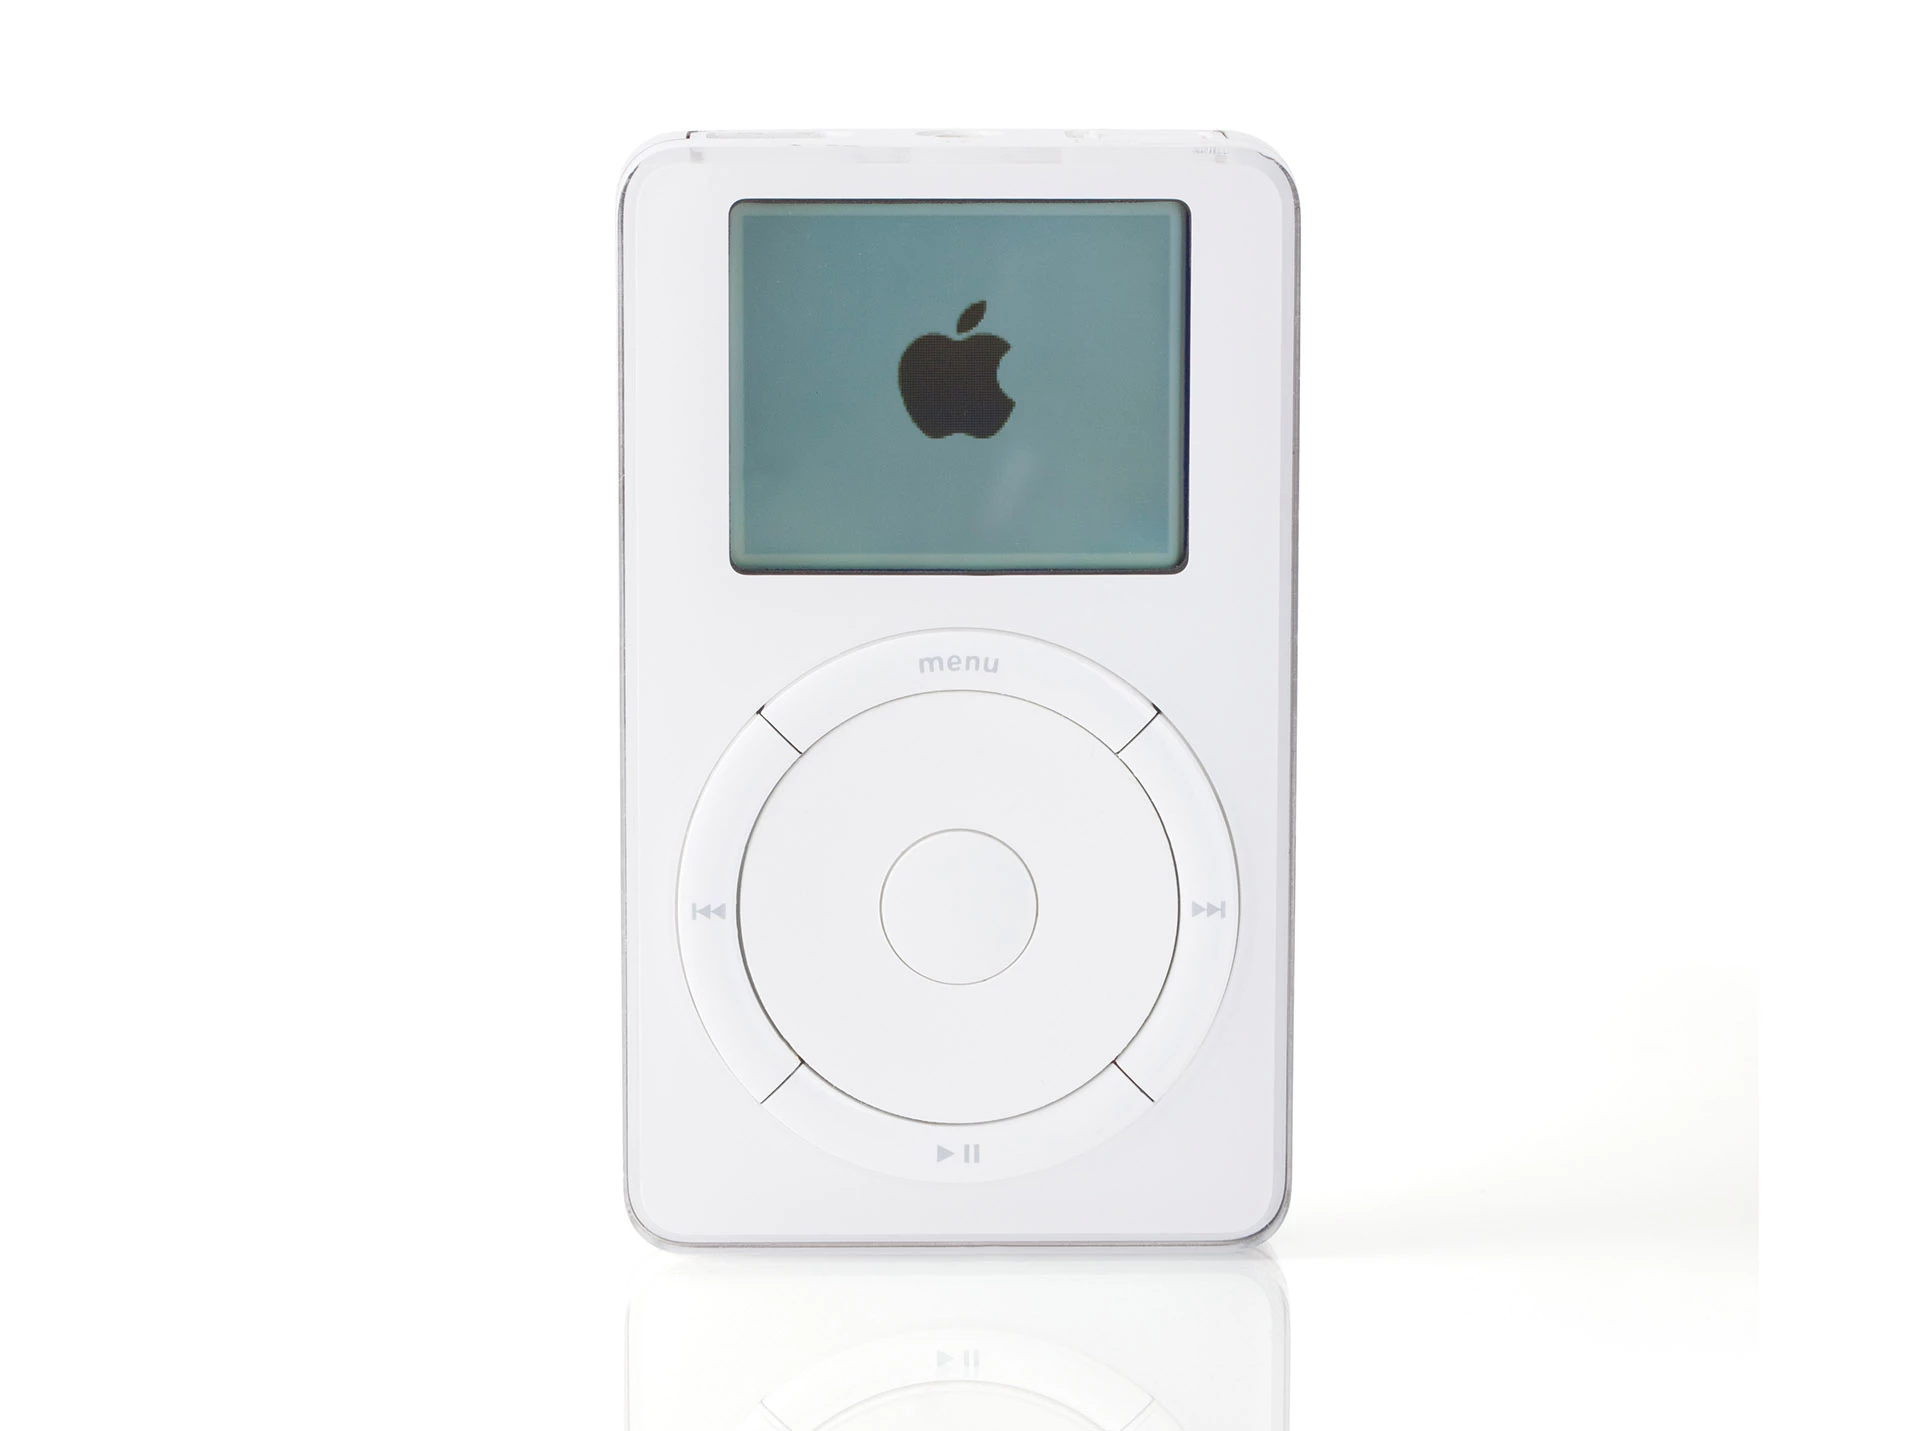 Apple iPod, first generation.